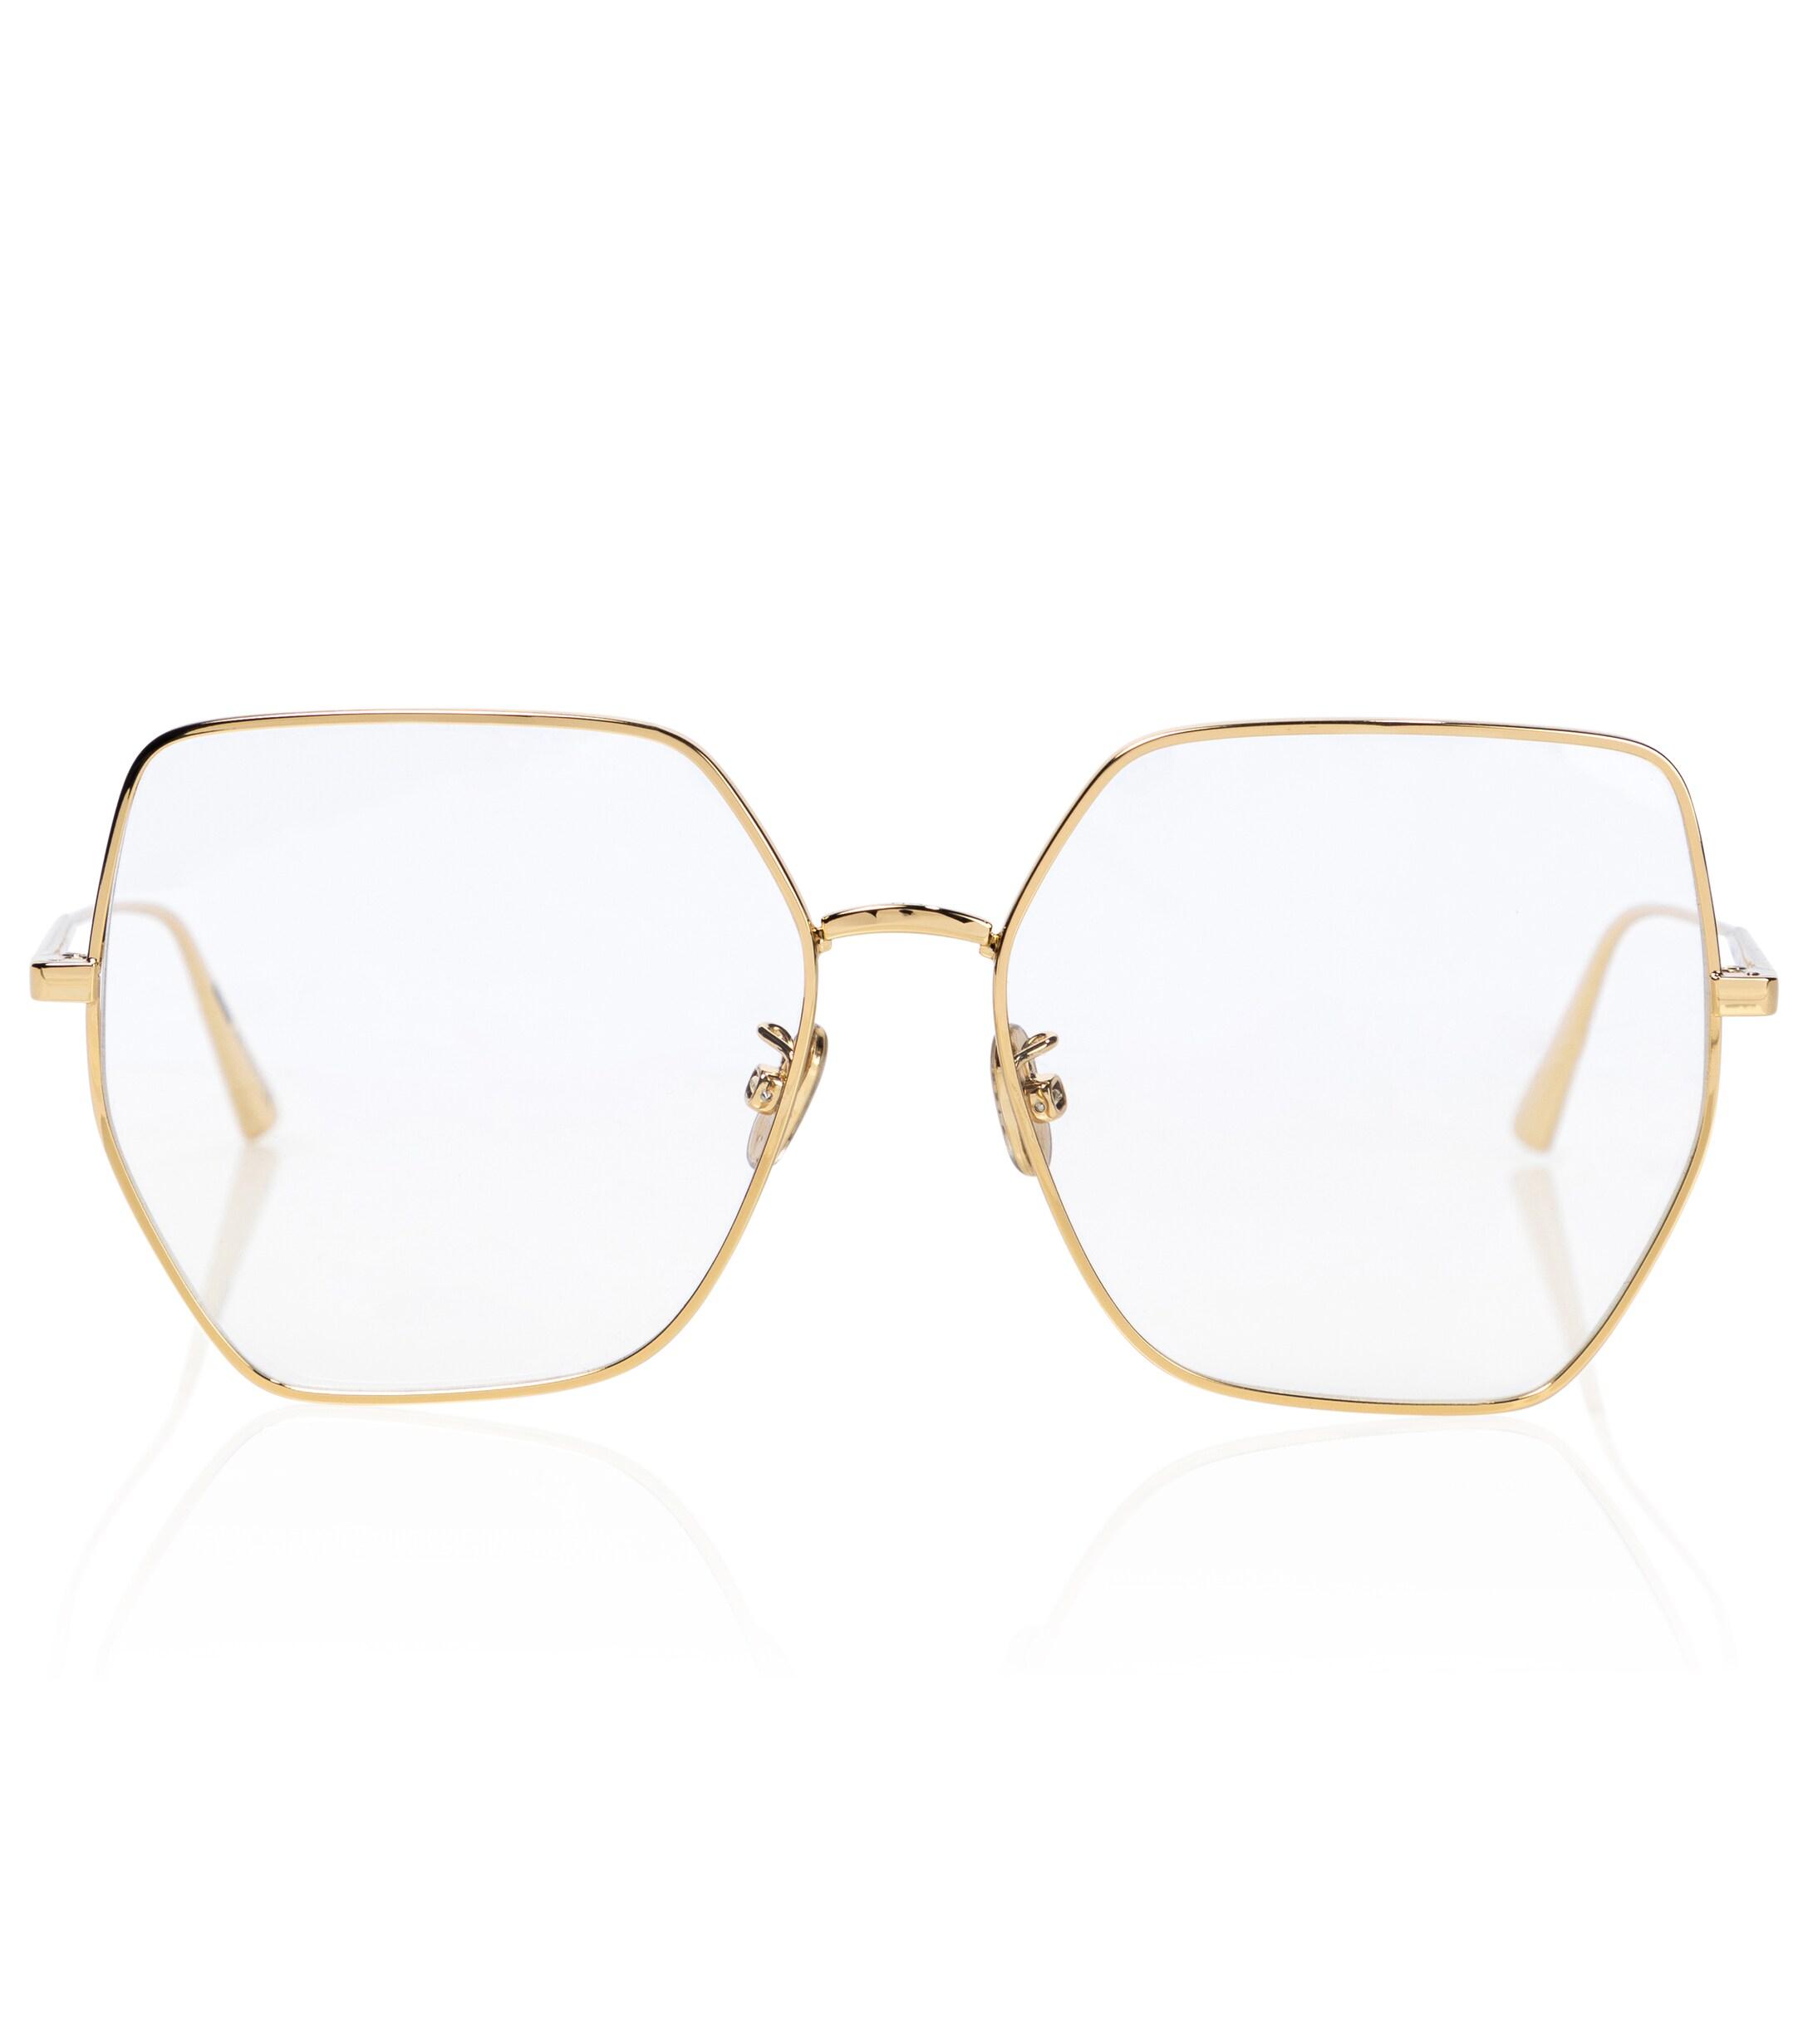 Dior Gafas Gemdioro S2u Oversized in Gold (Metallic) | Lyst